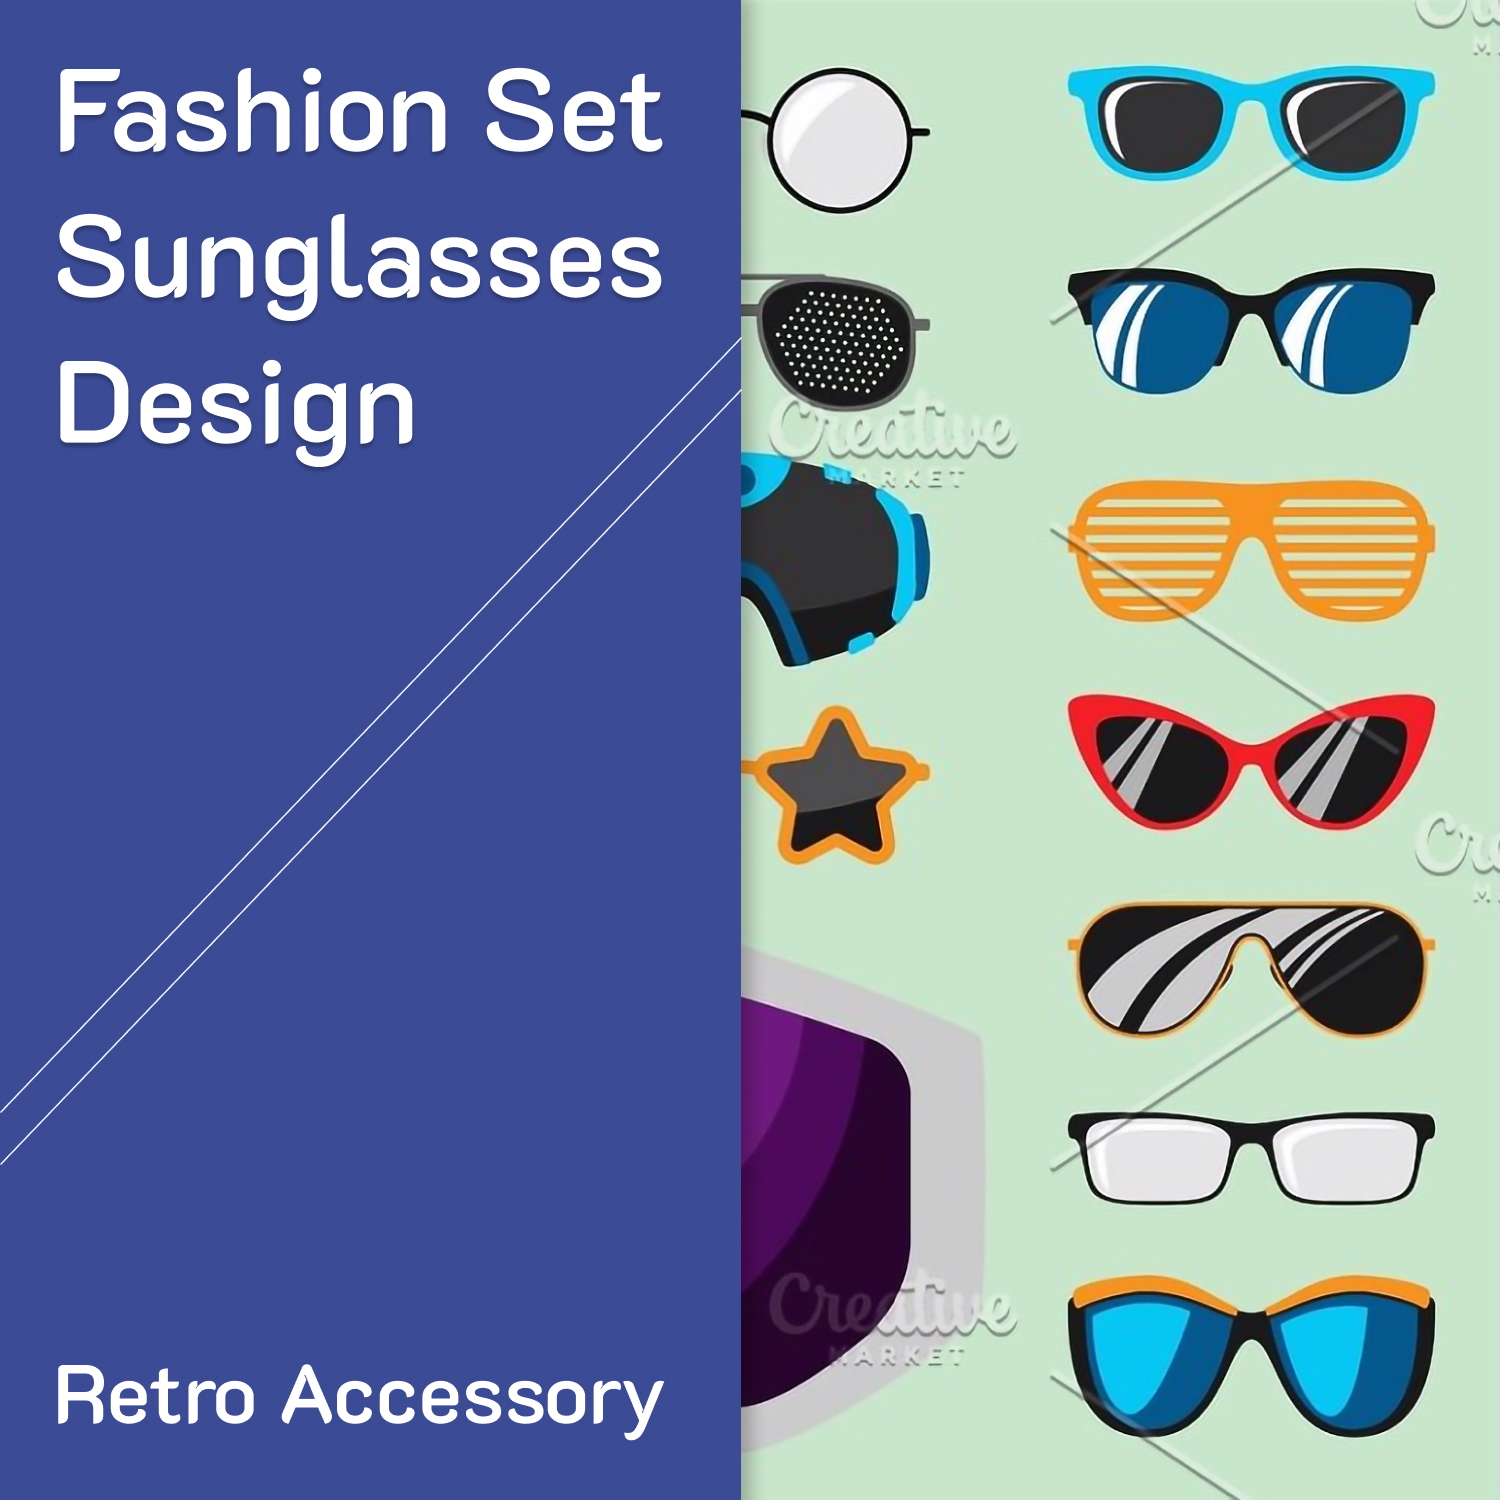 Images preview fashion set sunglasses design retro accessory.